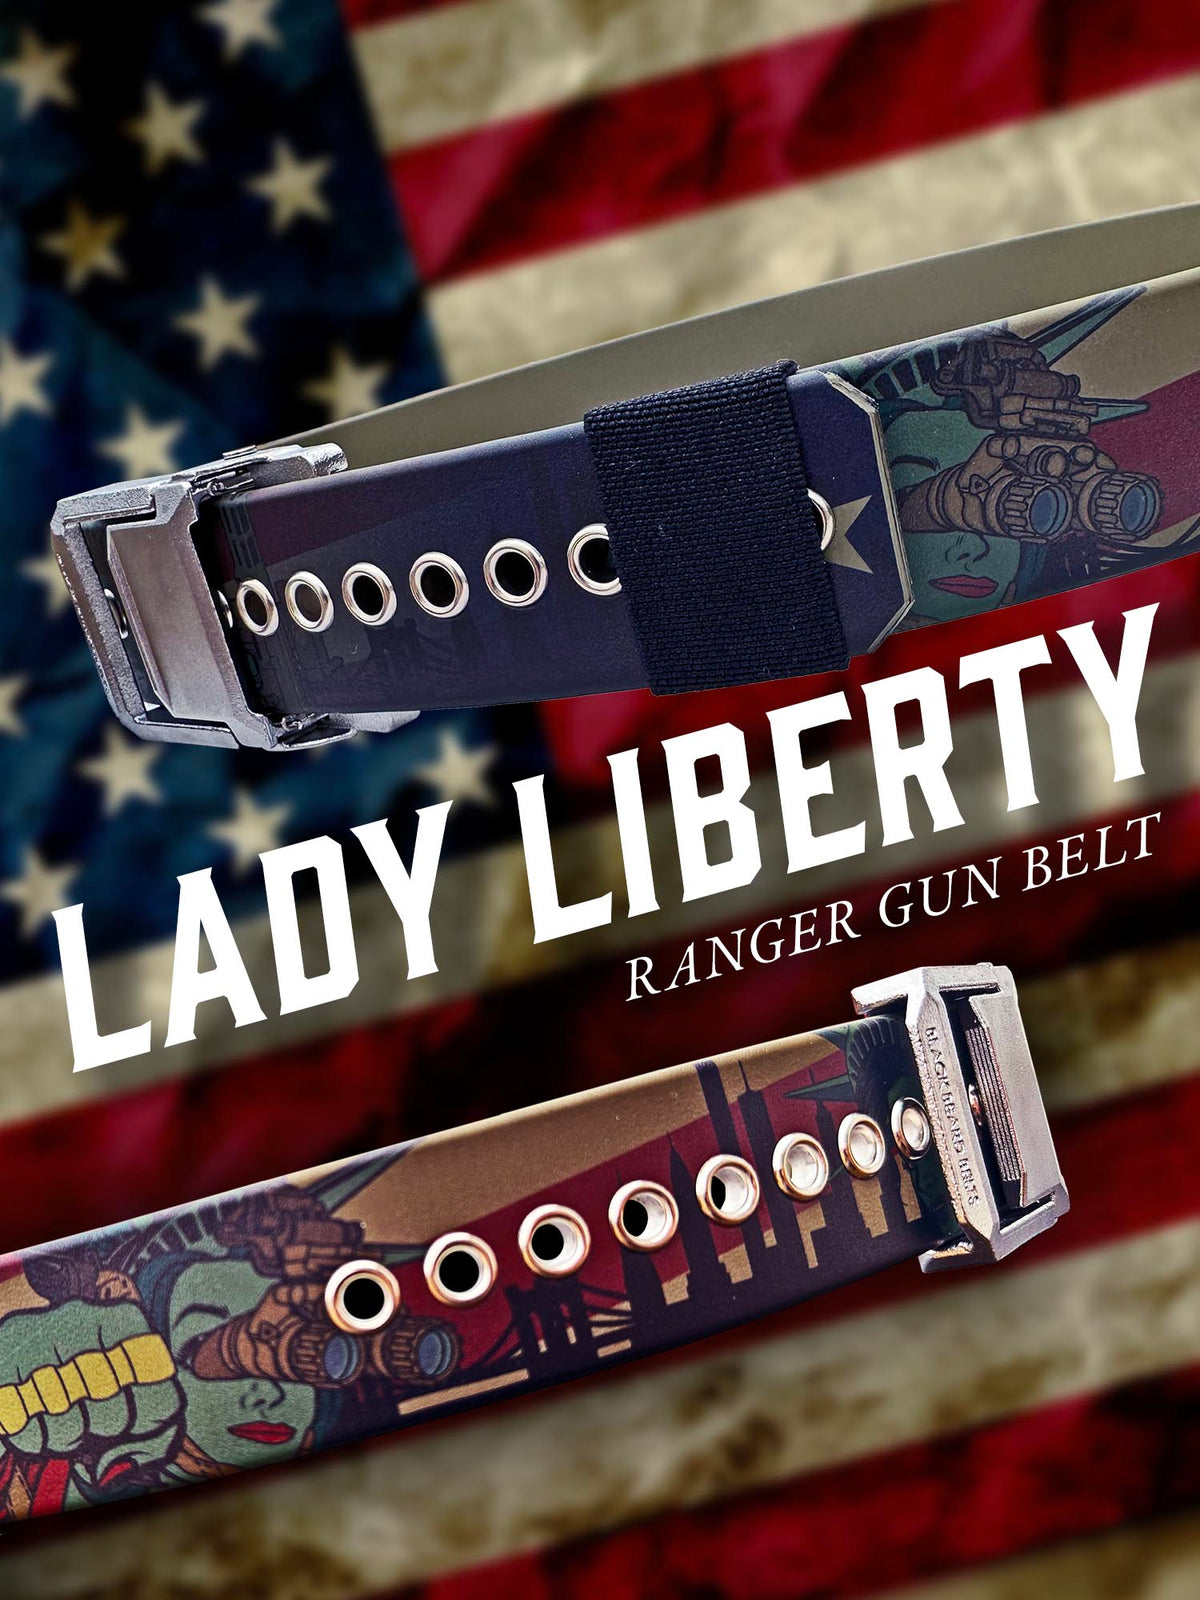 LADY LIBERTY RANGER GUN BELT- ONE SIZE